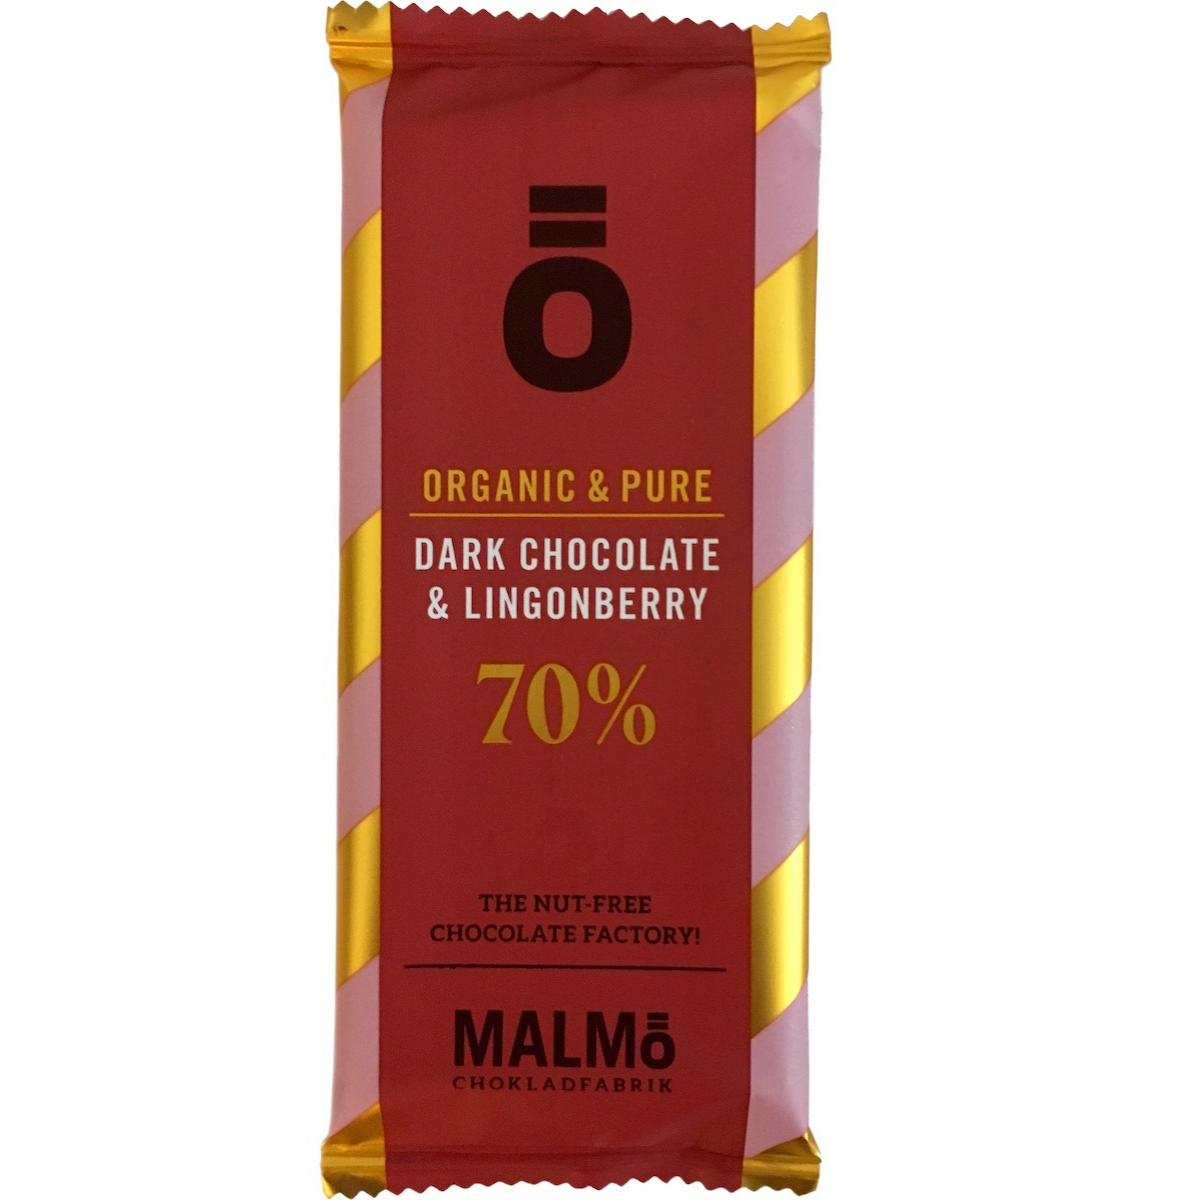 Ekologisk choklad från Malmö chokladfabrik